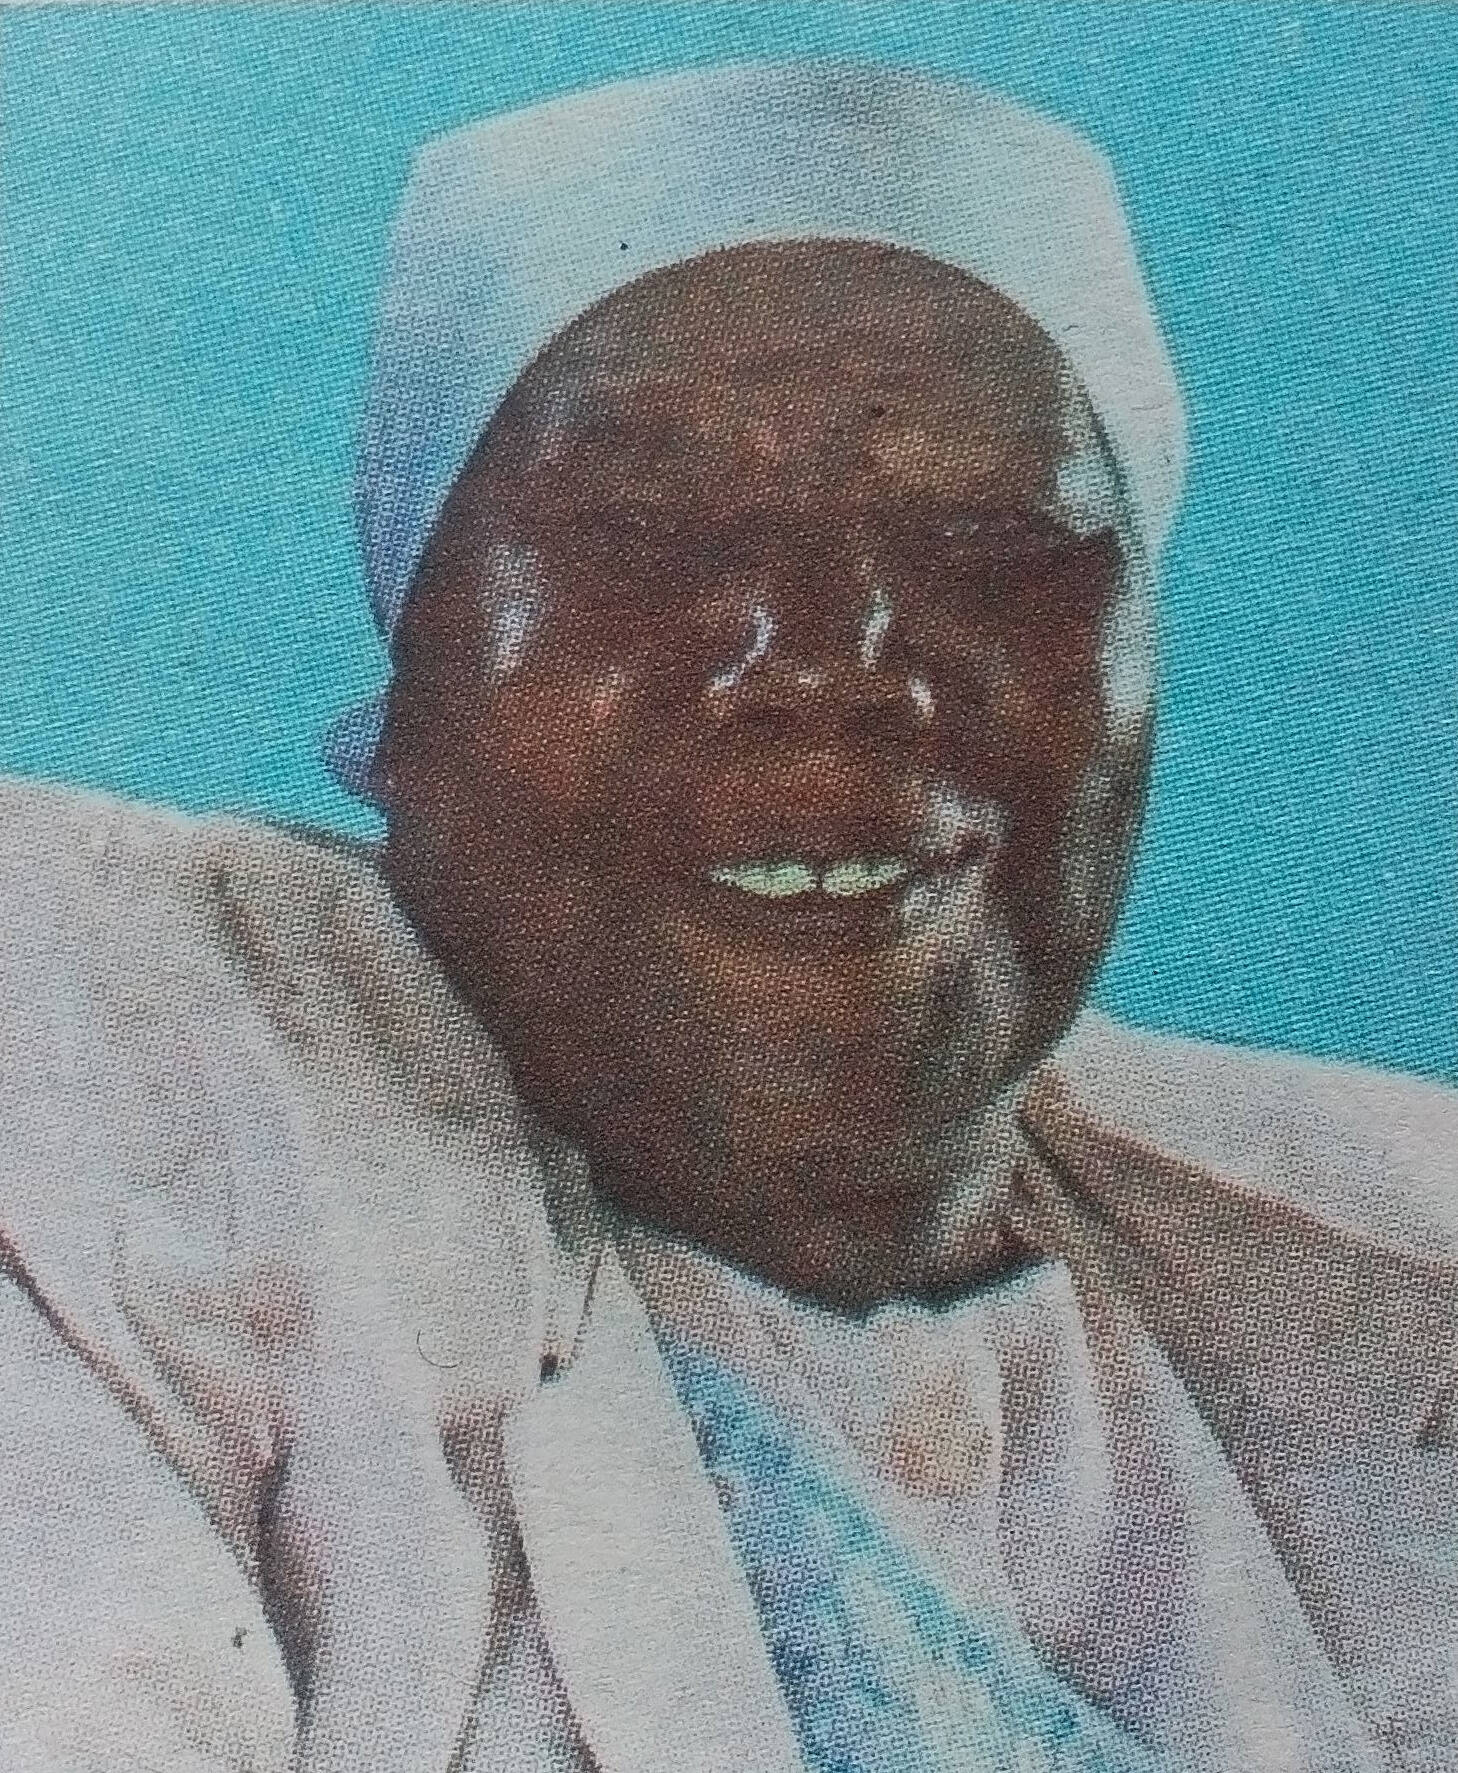 Obituary Image of Hannah Wanjiku Mungai 1928 - 2017